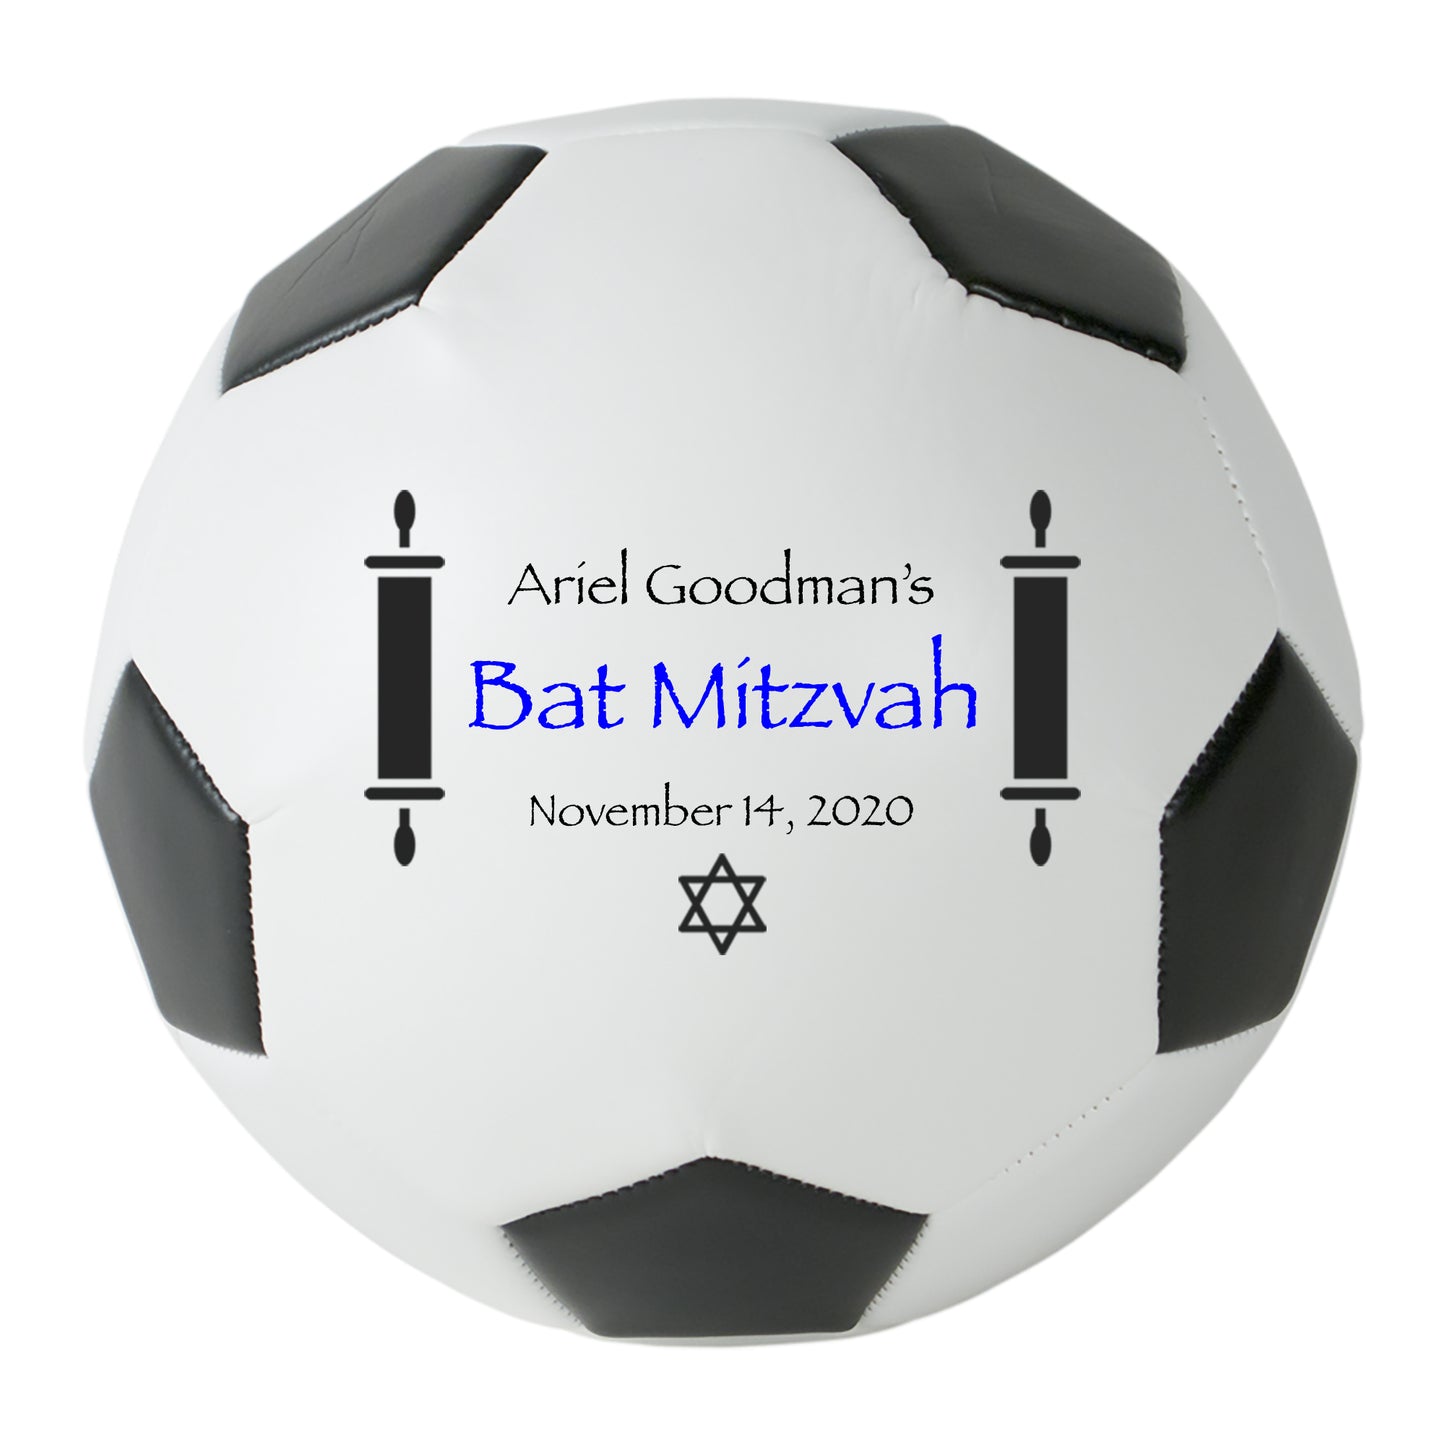 Bar Mitzvah and Bat Mitzvah Soccer Ball Keepsake Gift